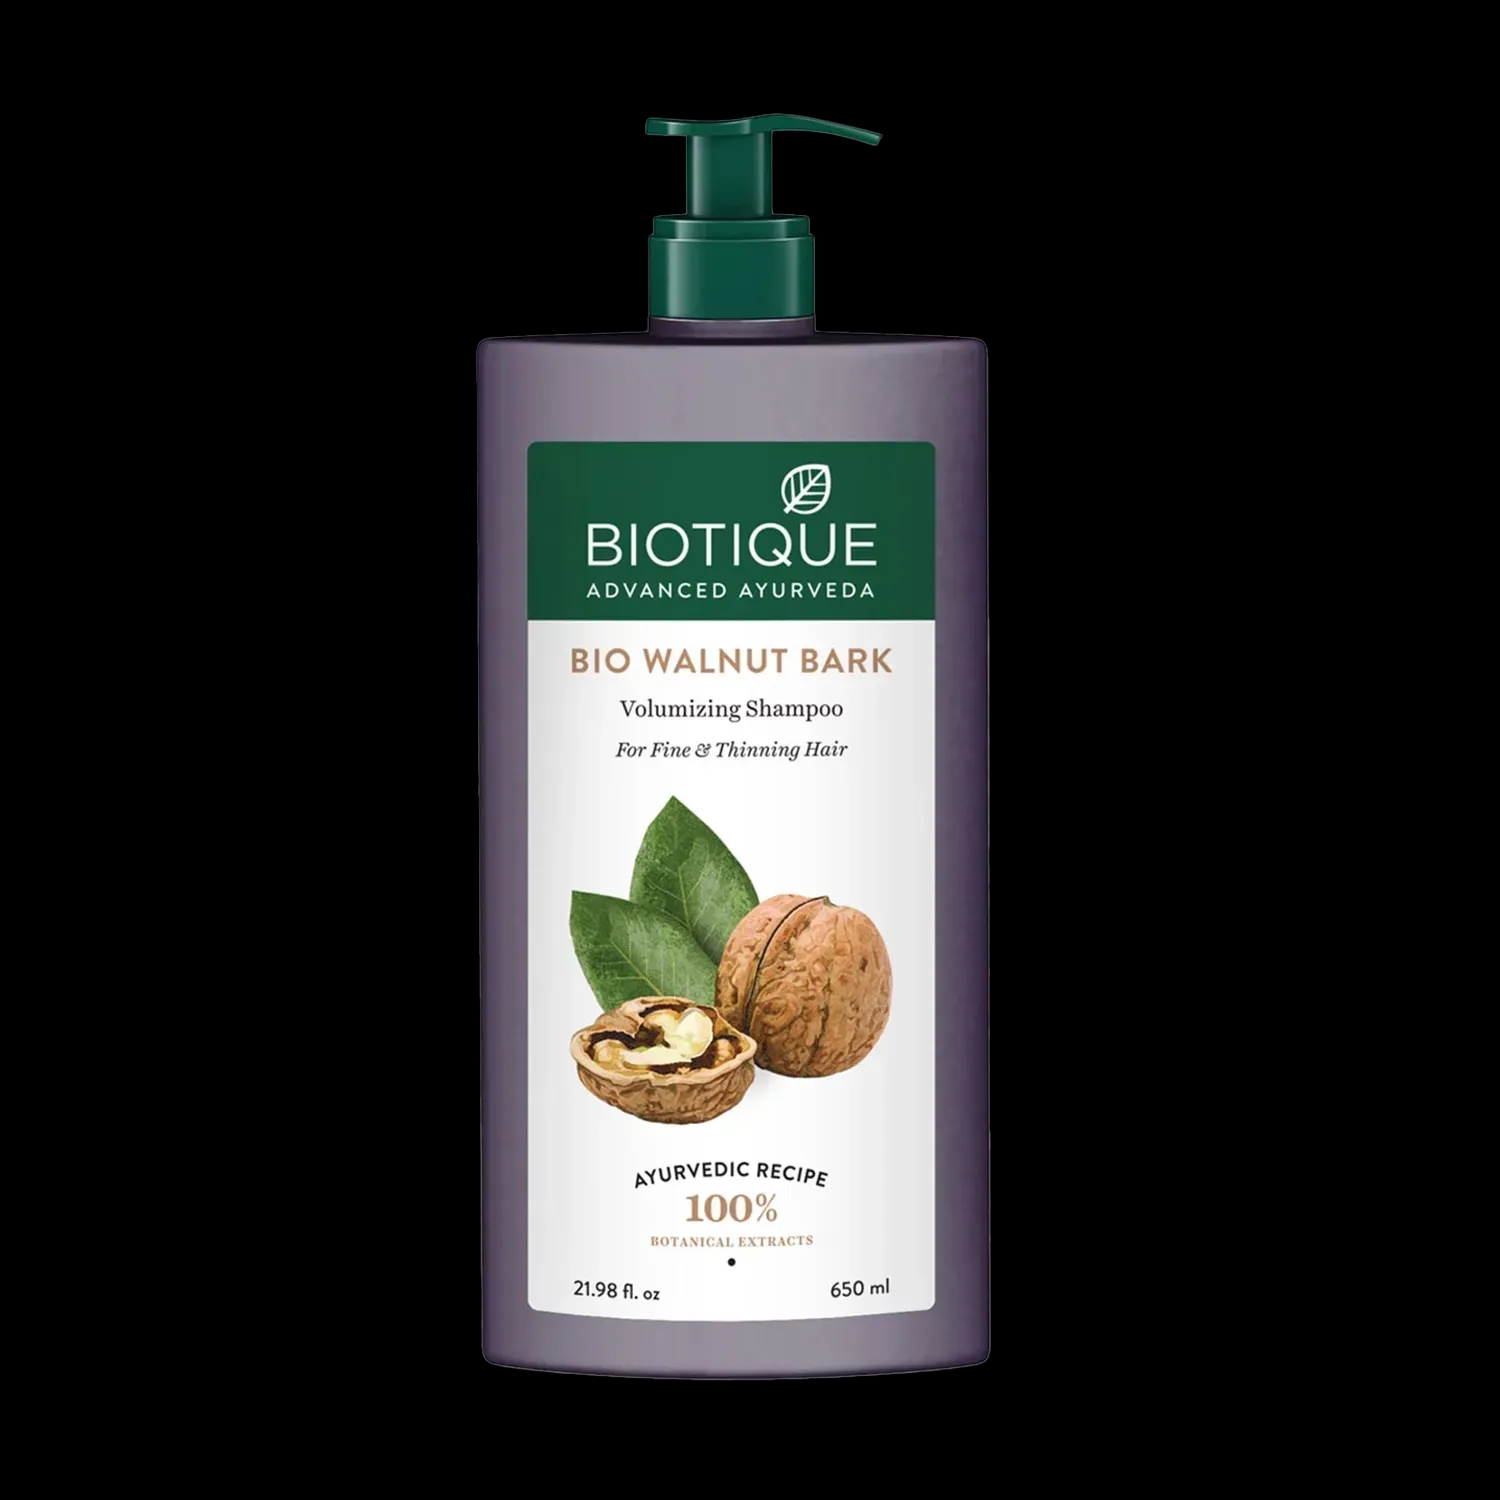 Biotique | Biotique Bio Walnut Bark Volumizing Shampoo for Fine & Thinning Hair (650ml)